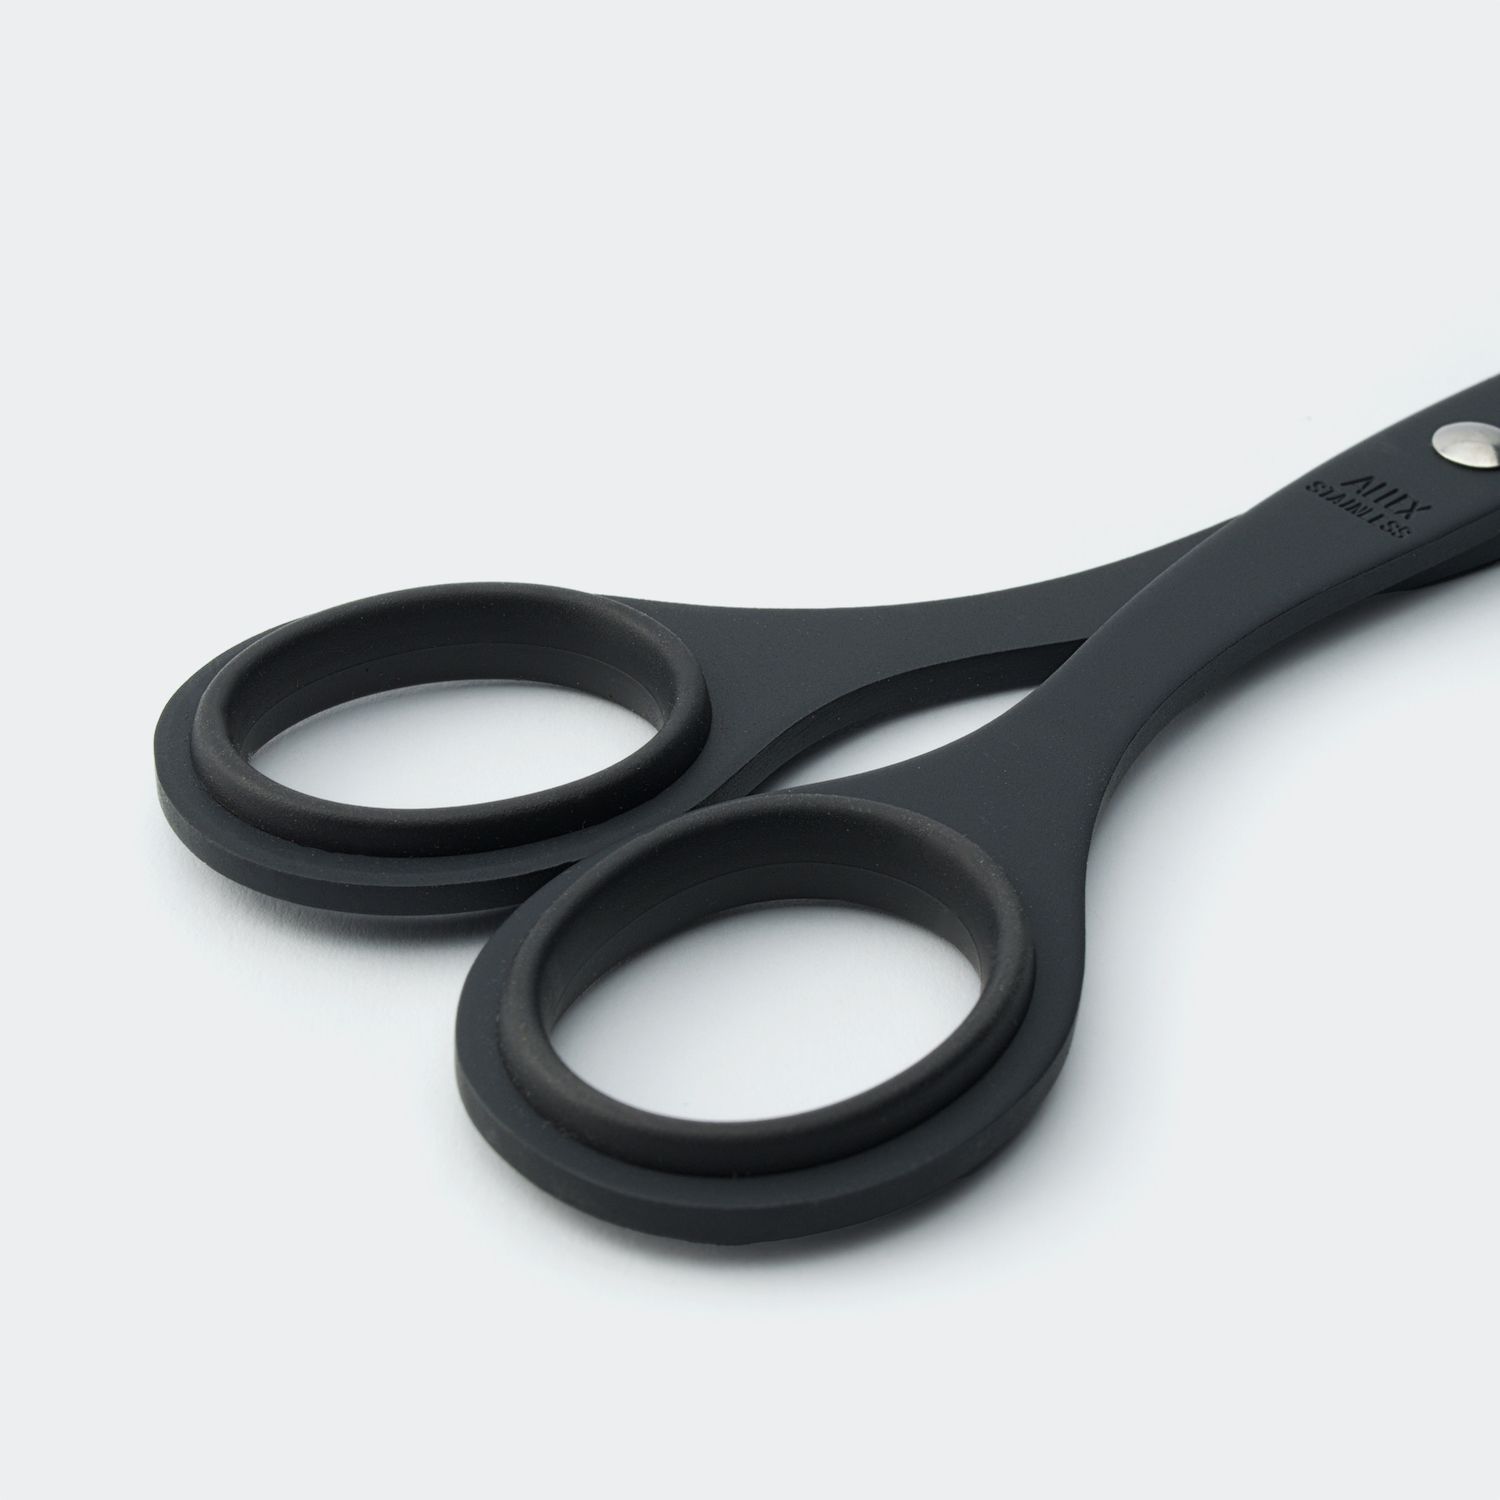 Allex S-165F Stainless Steel Office Scissors — The Gentleman